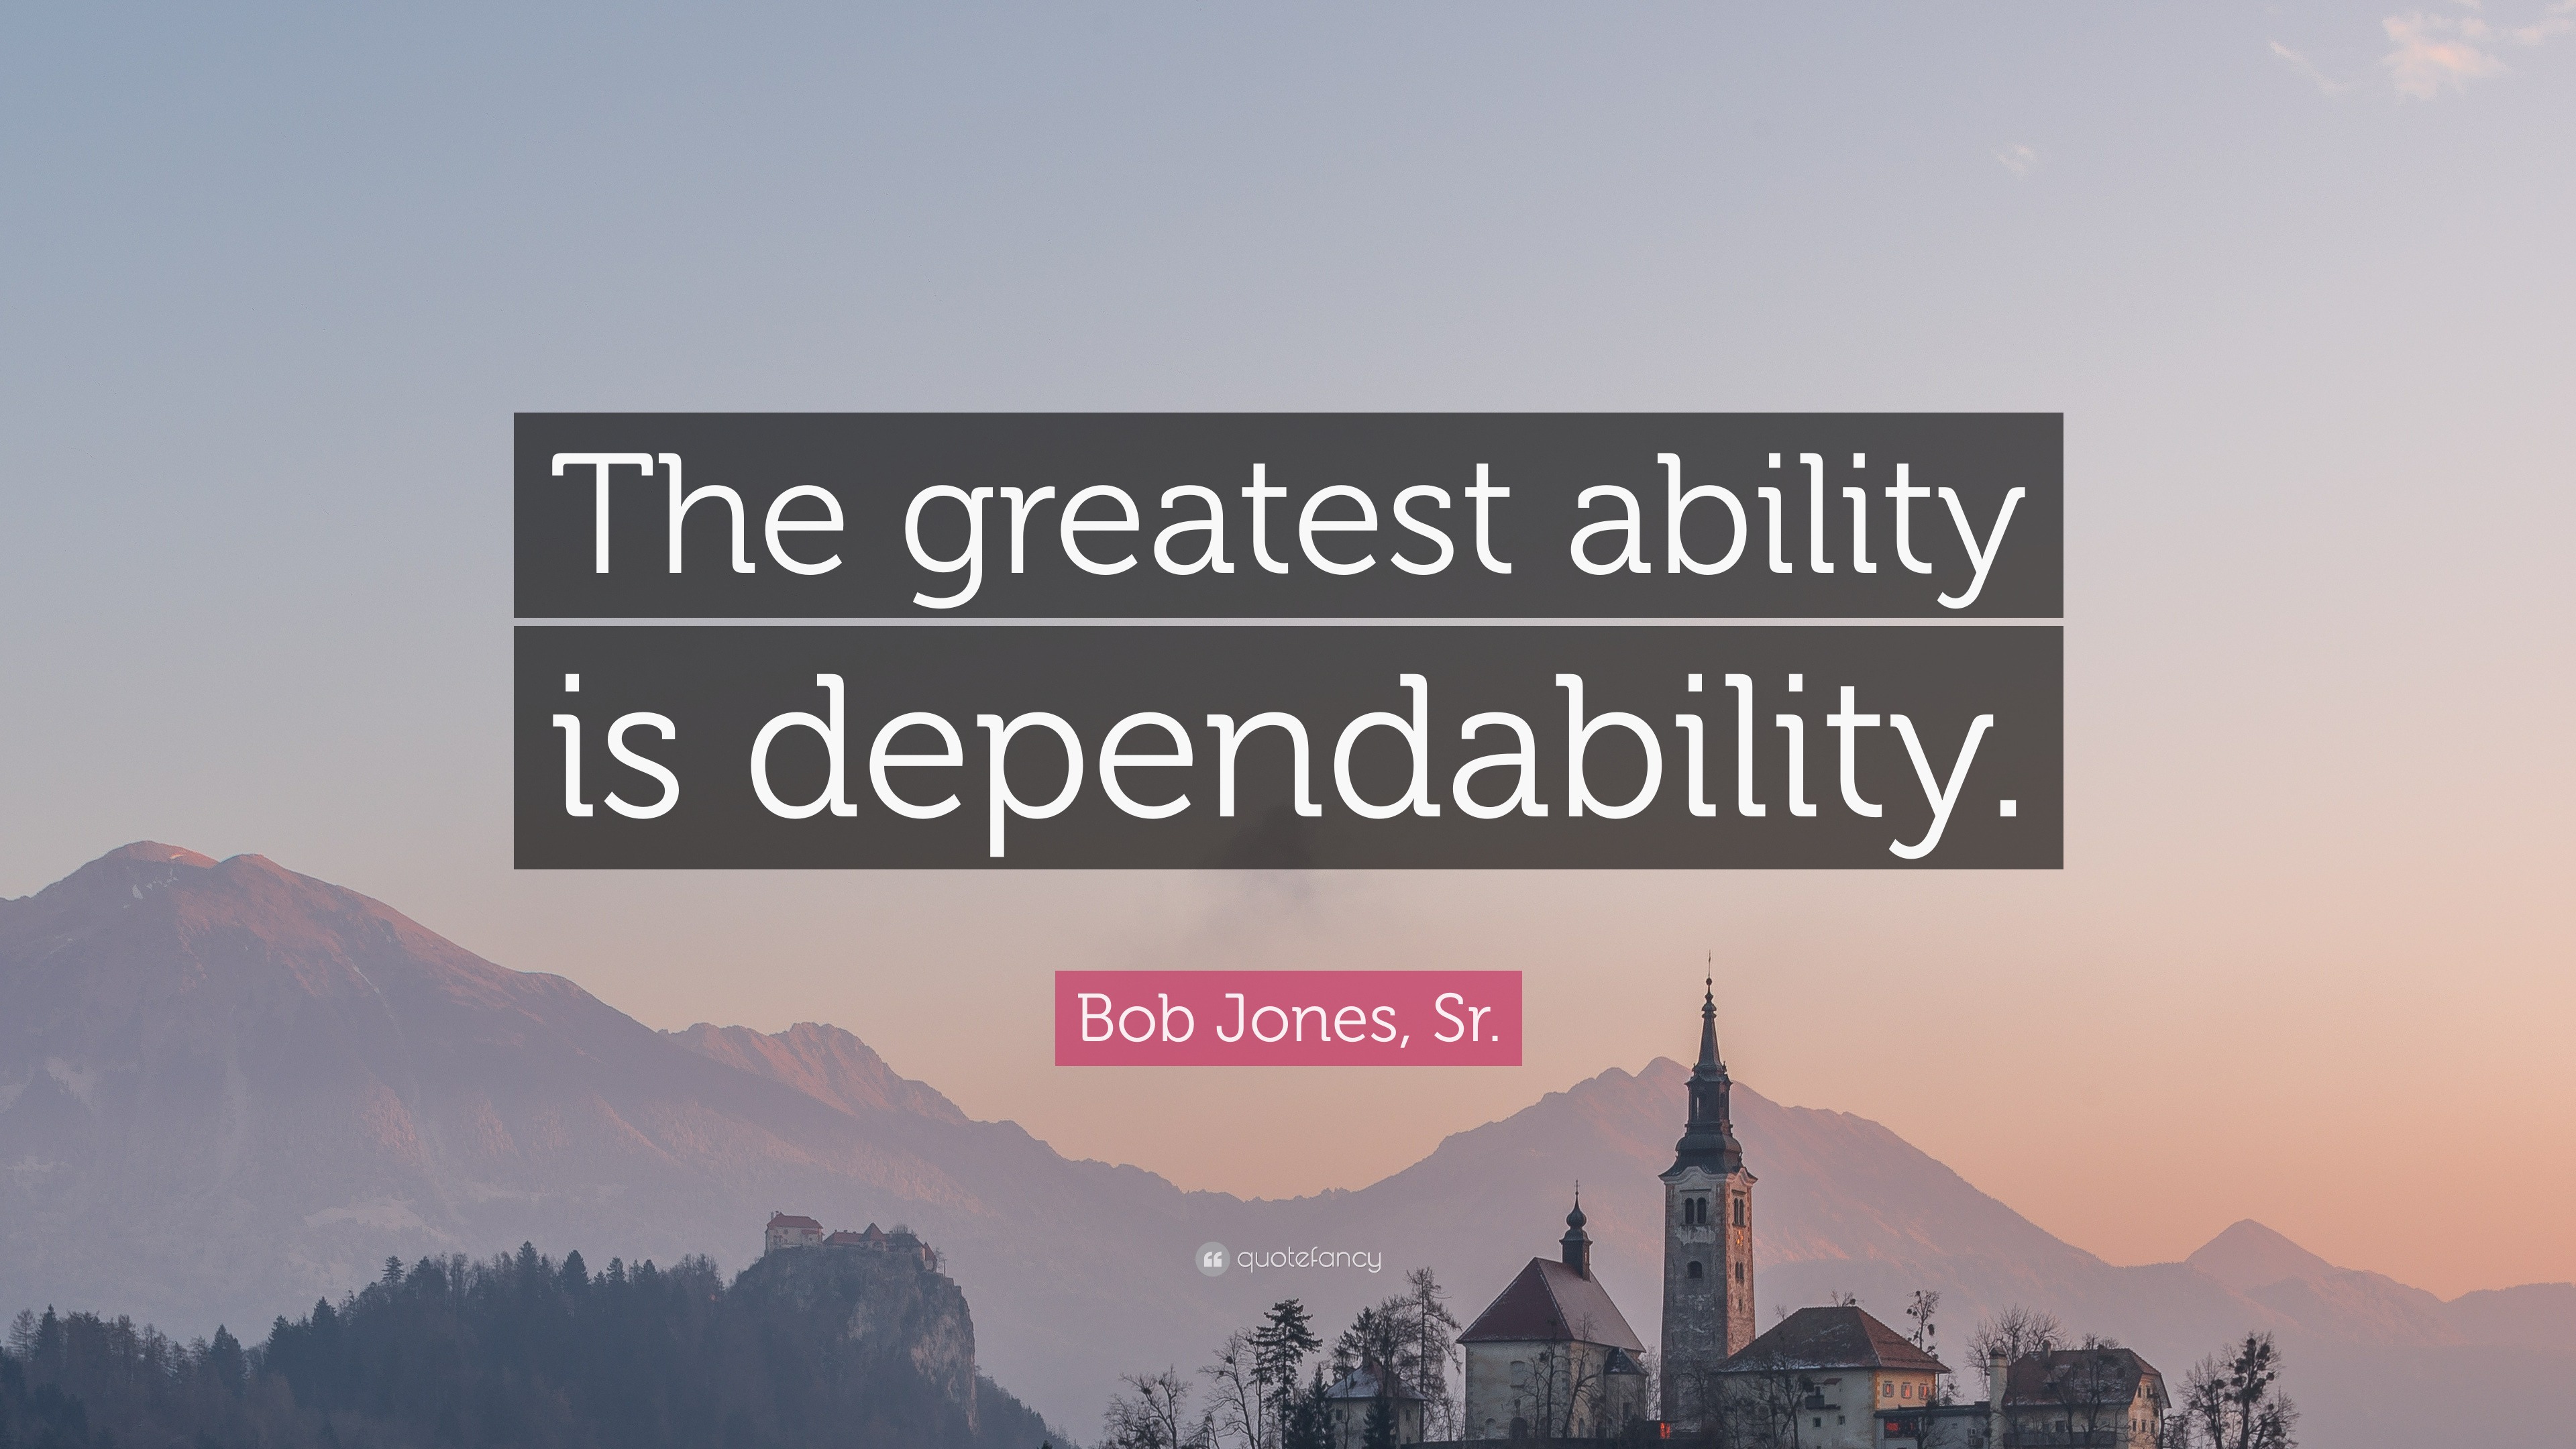 Bob Jones, Sr. Quote: "The greatest ability is dependability."